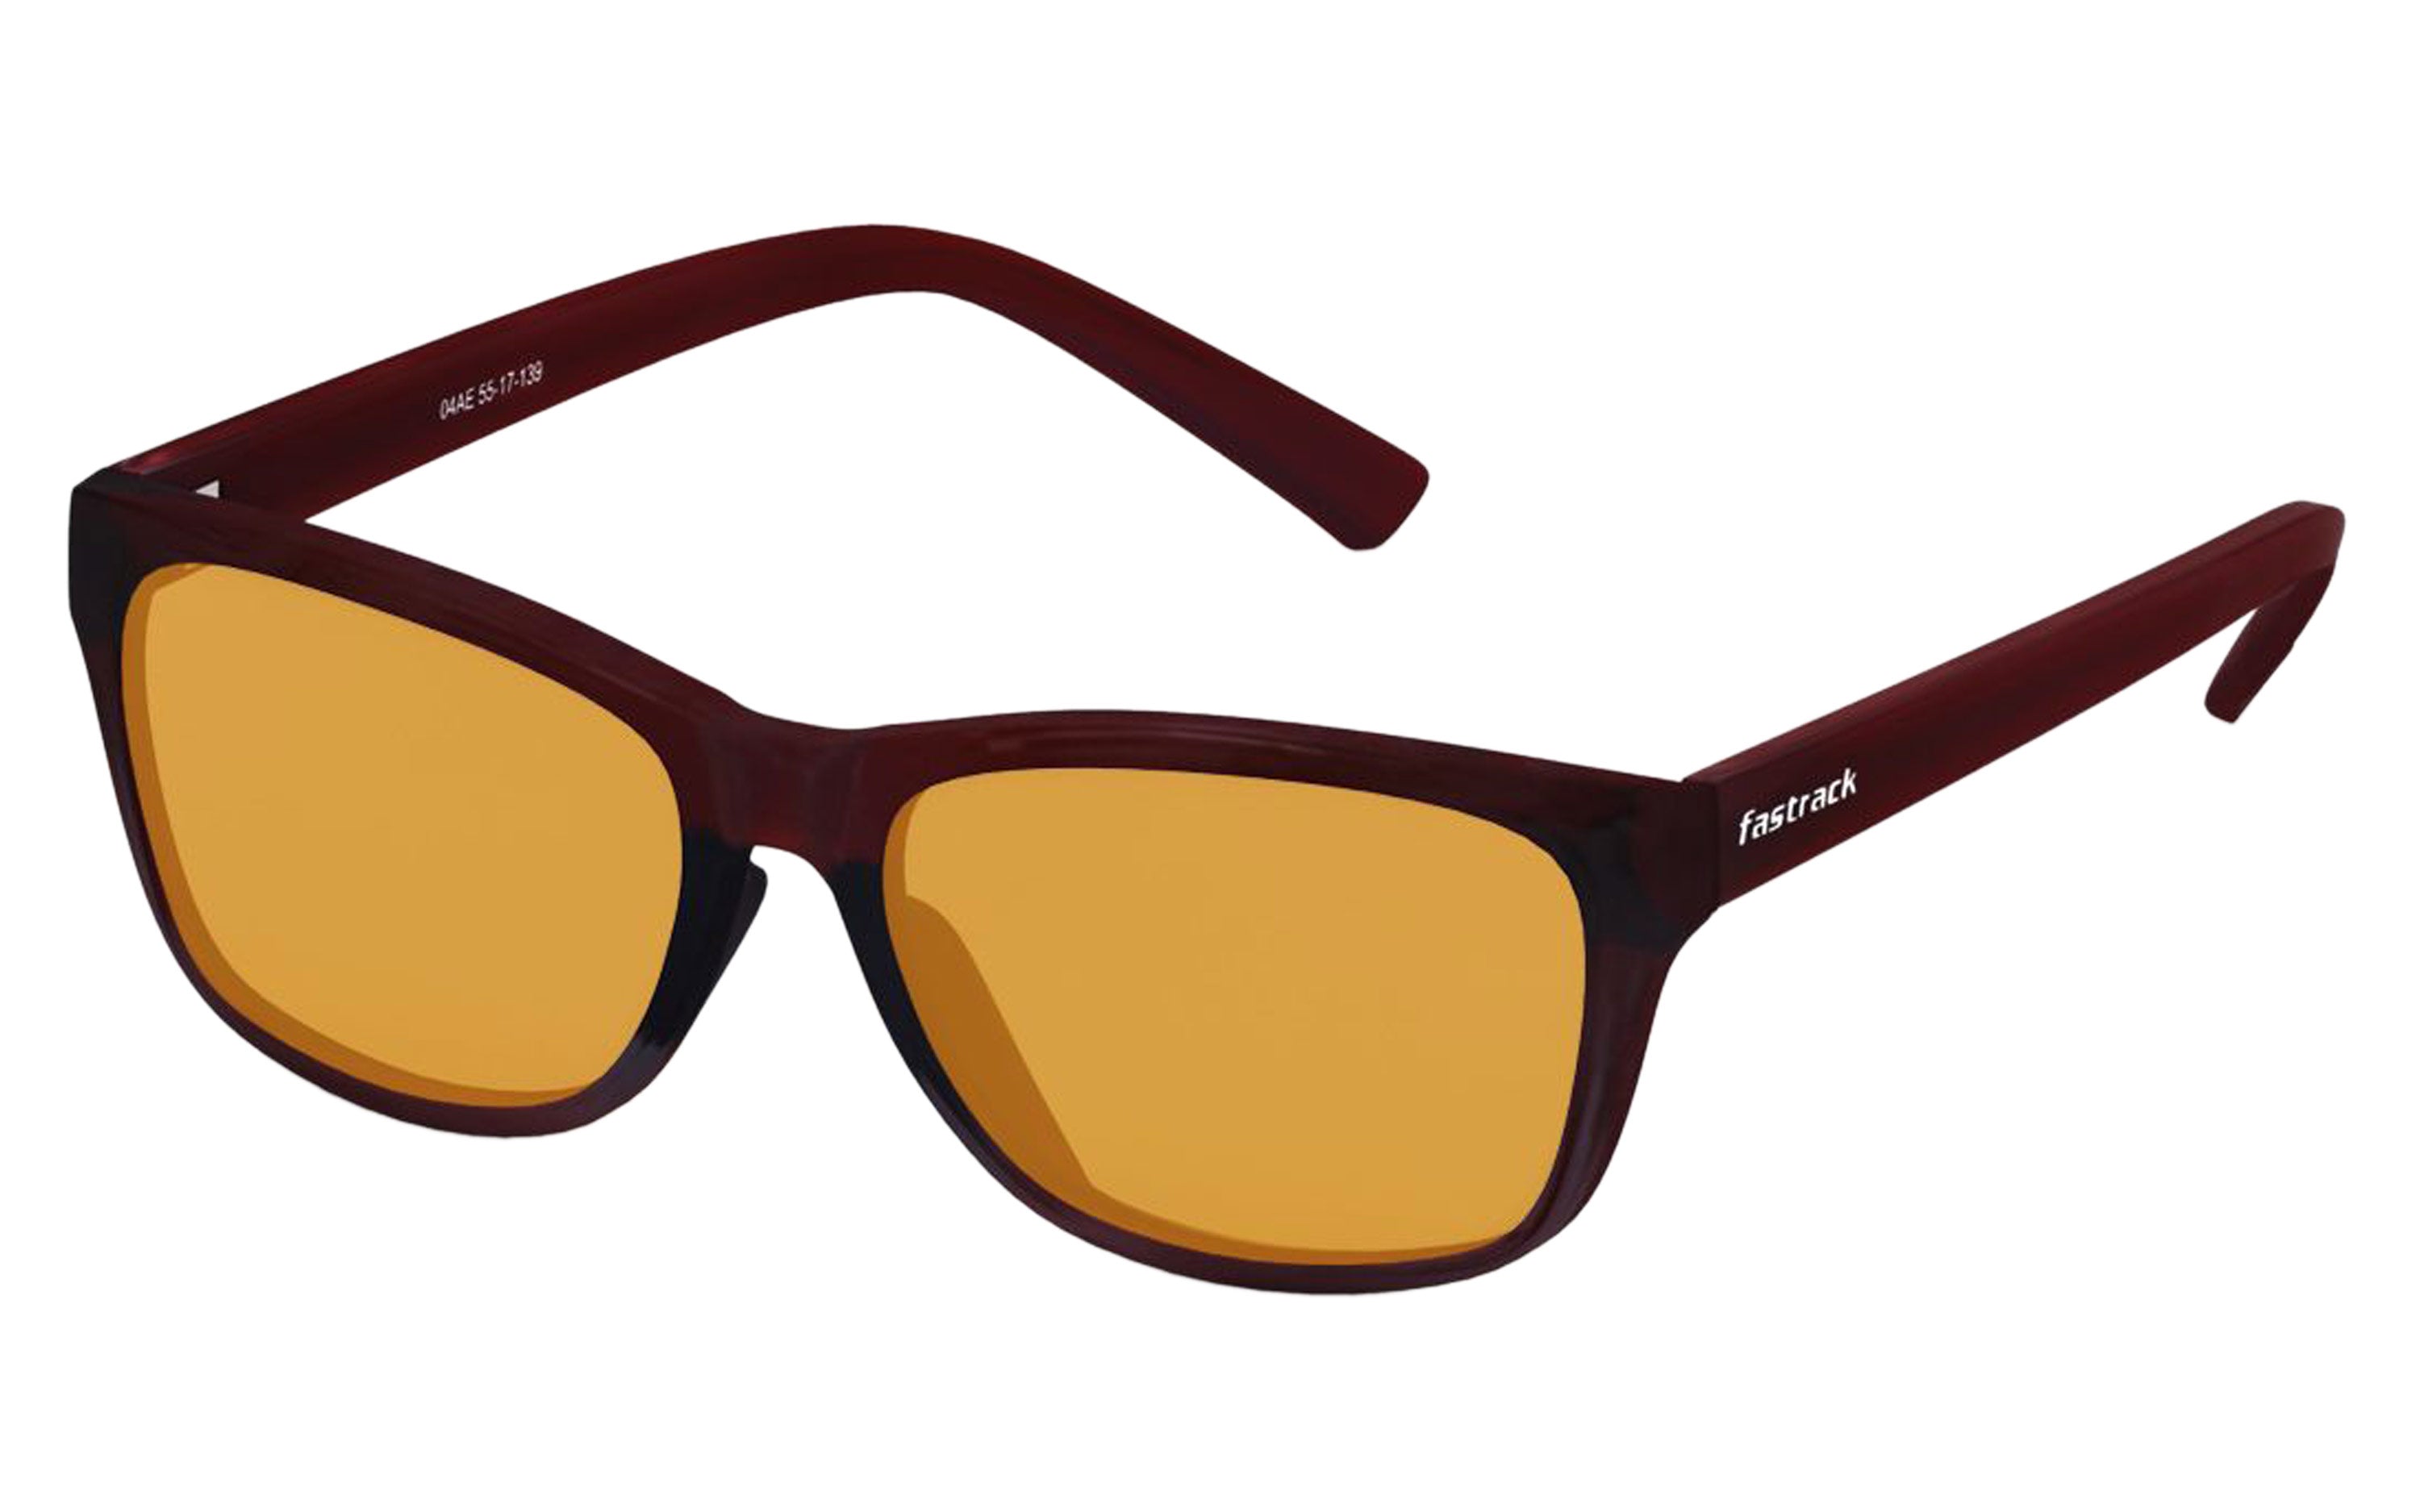 Fastrack Brown Wayfarer Sunglasses